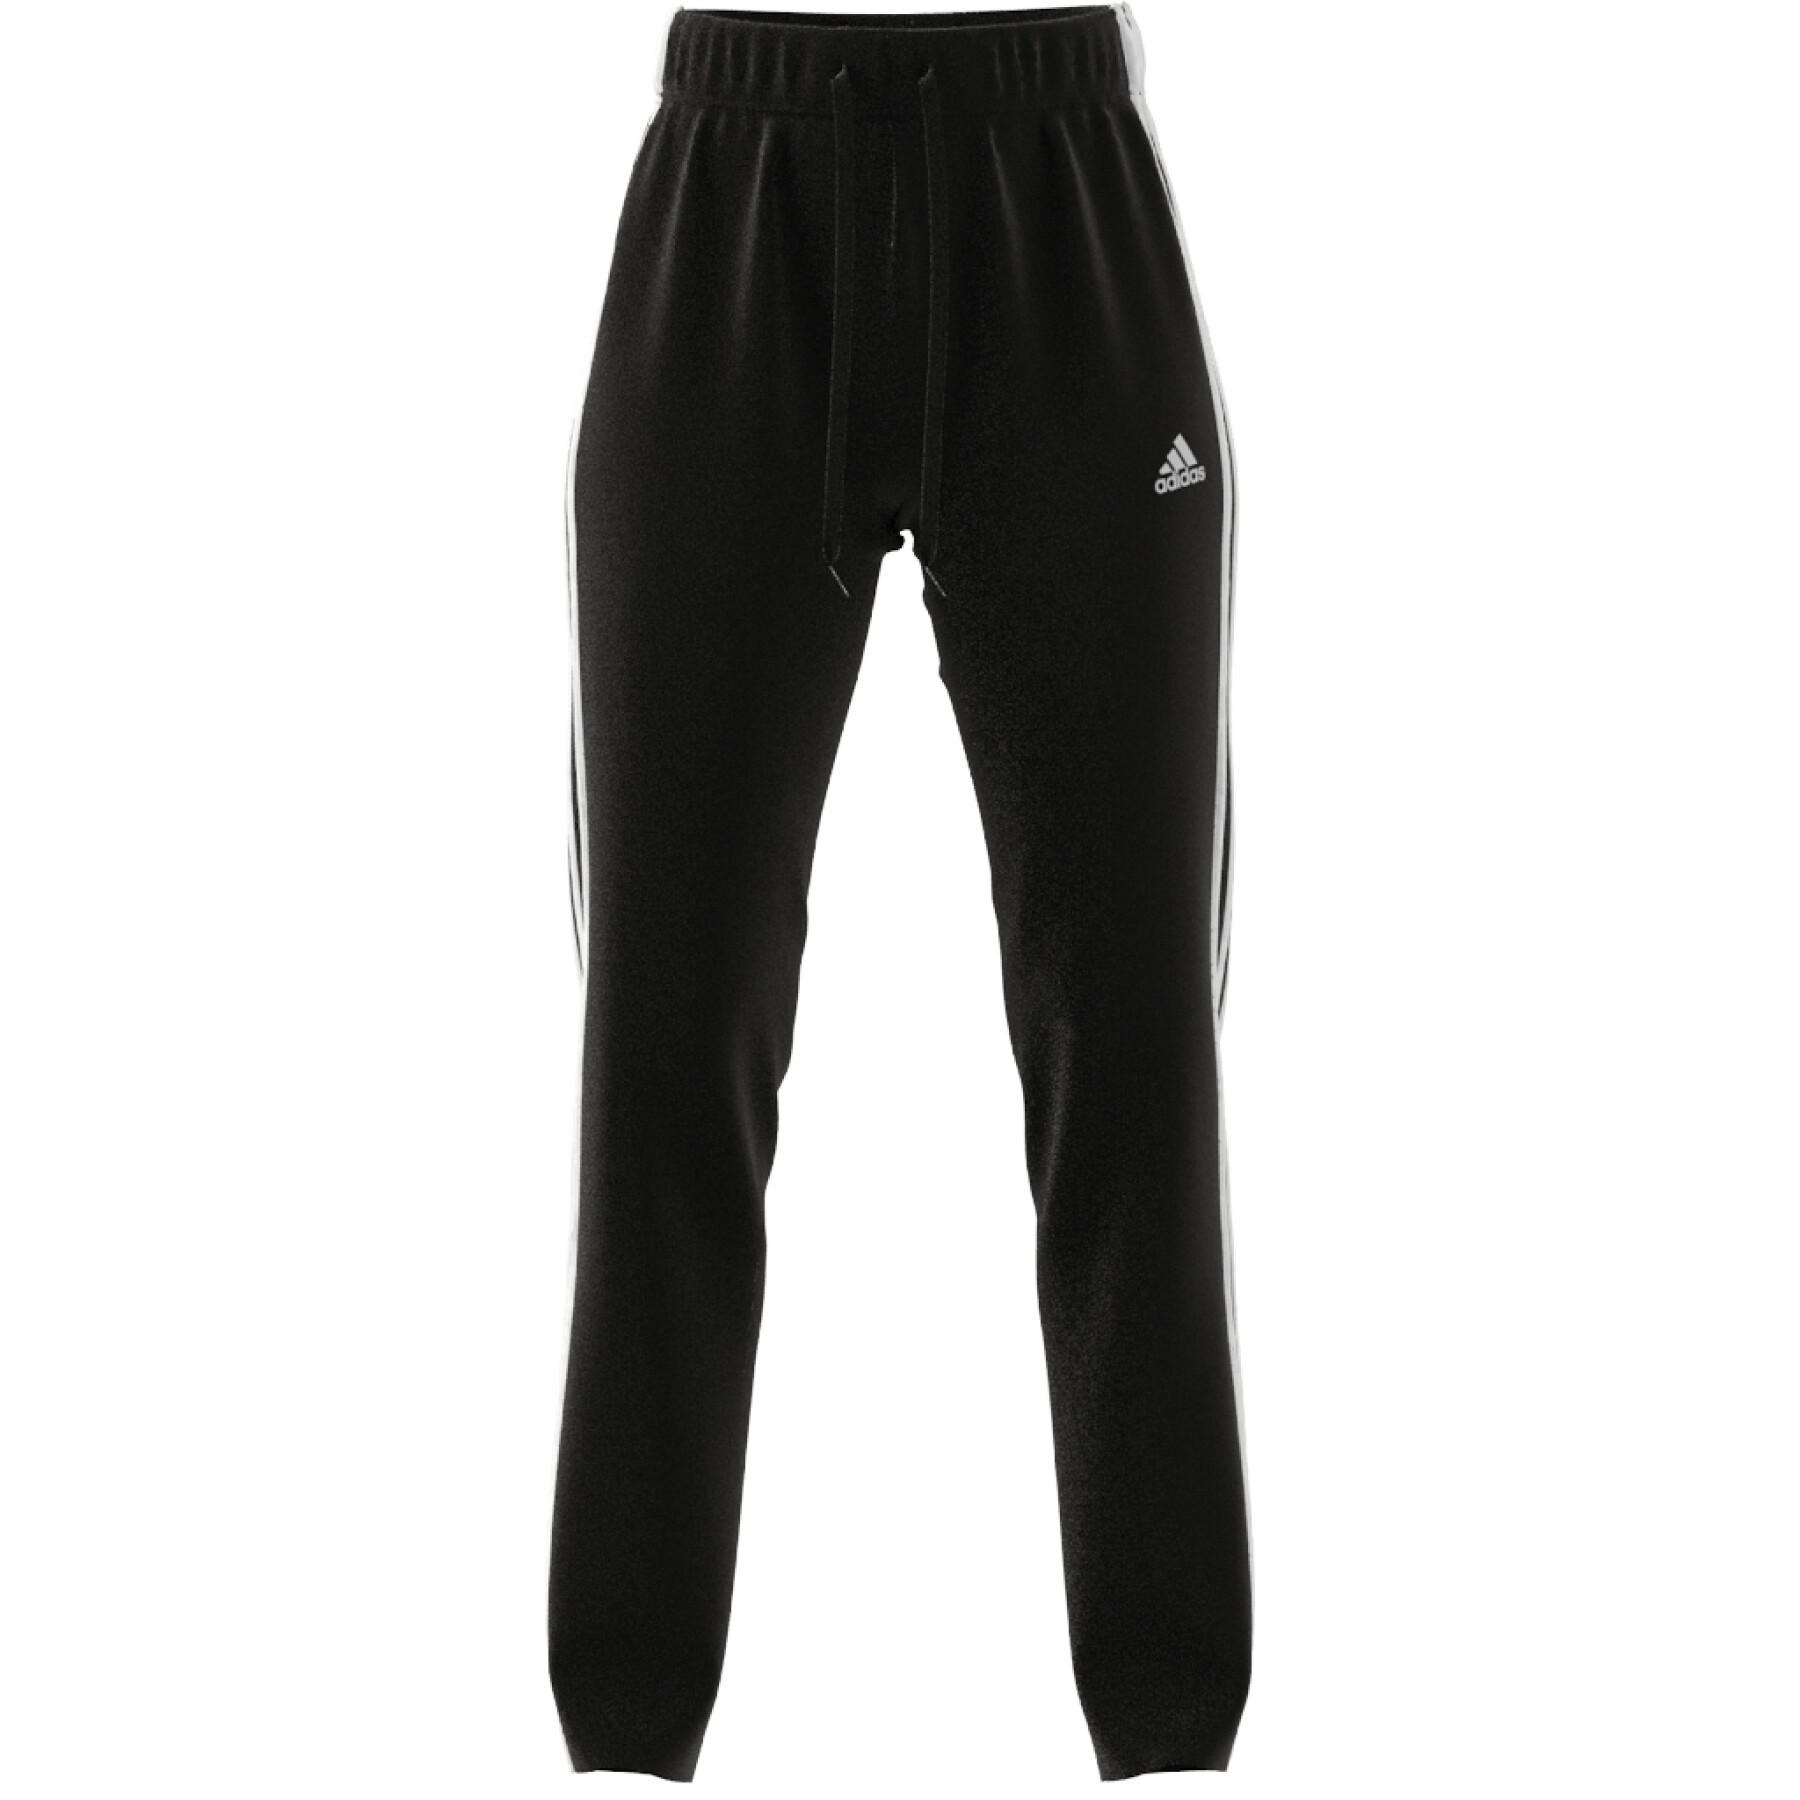 Damski strój do joggingu adidas 3-Stripes Essentials Warm-Up